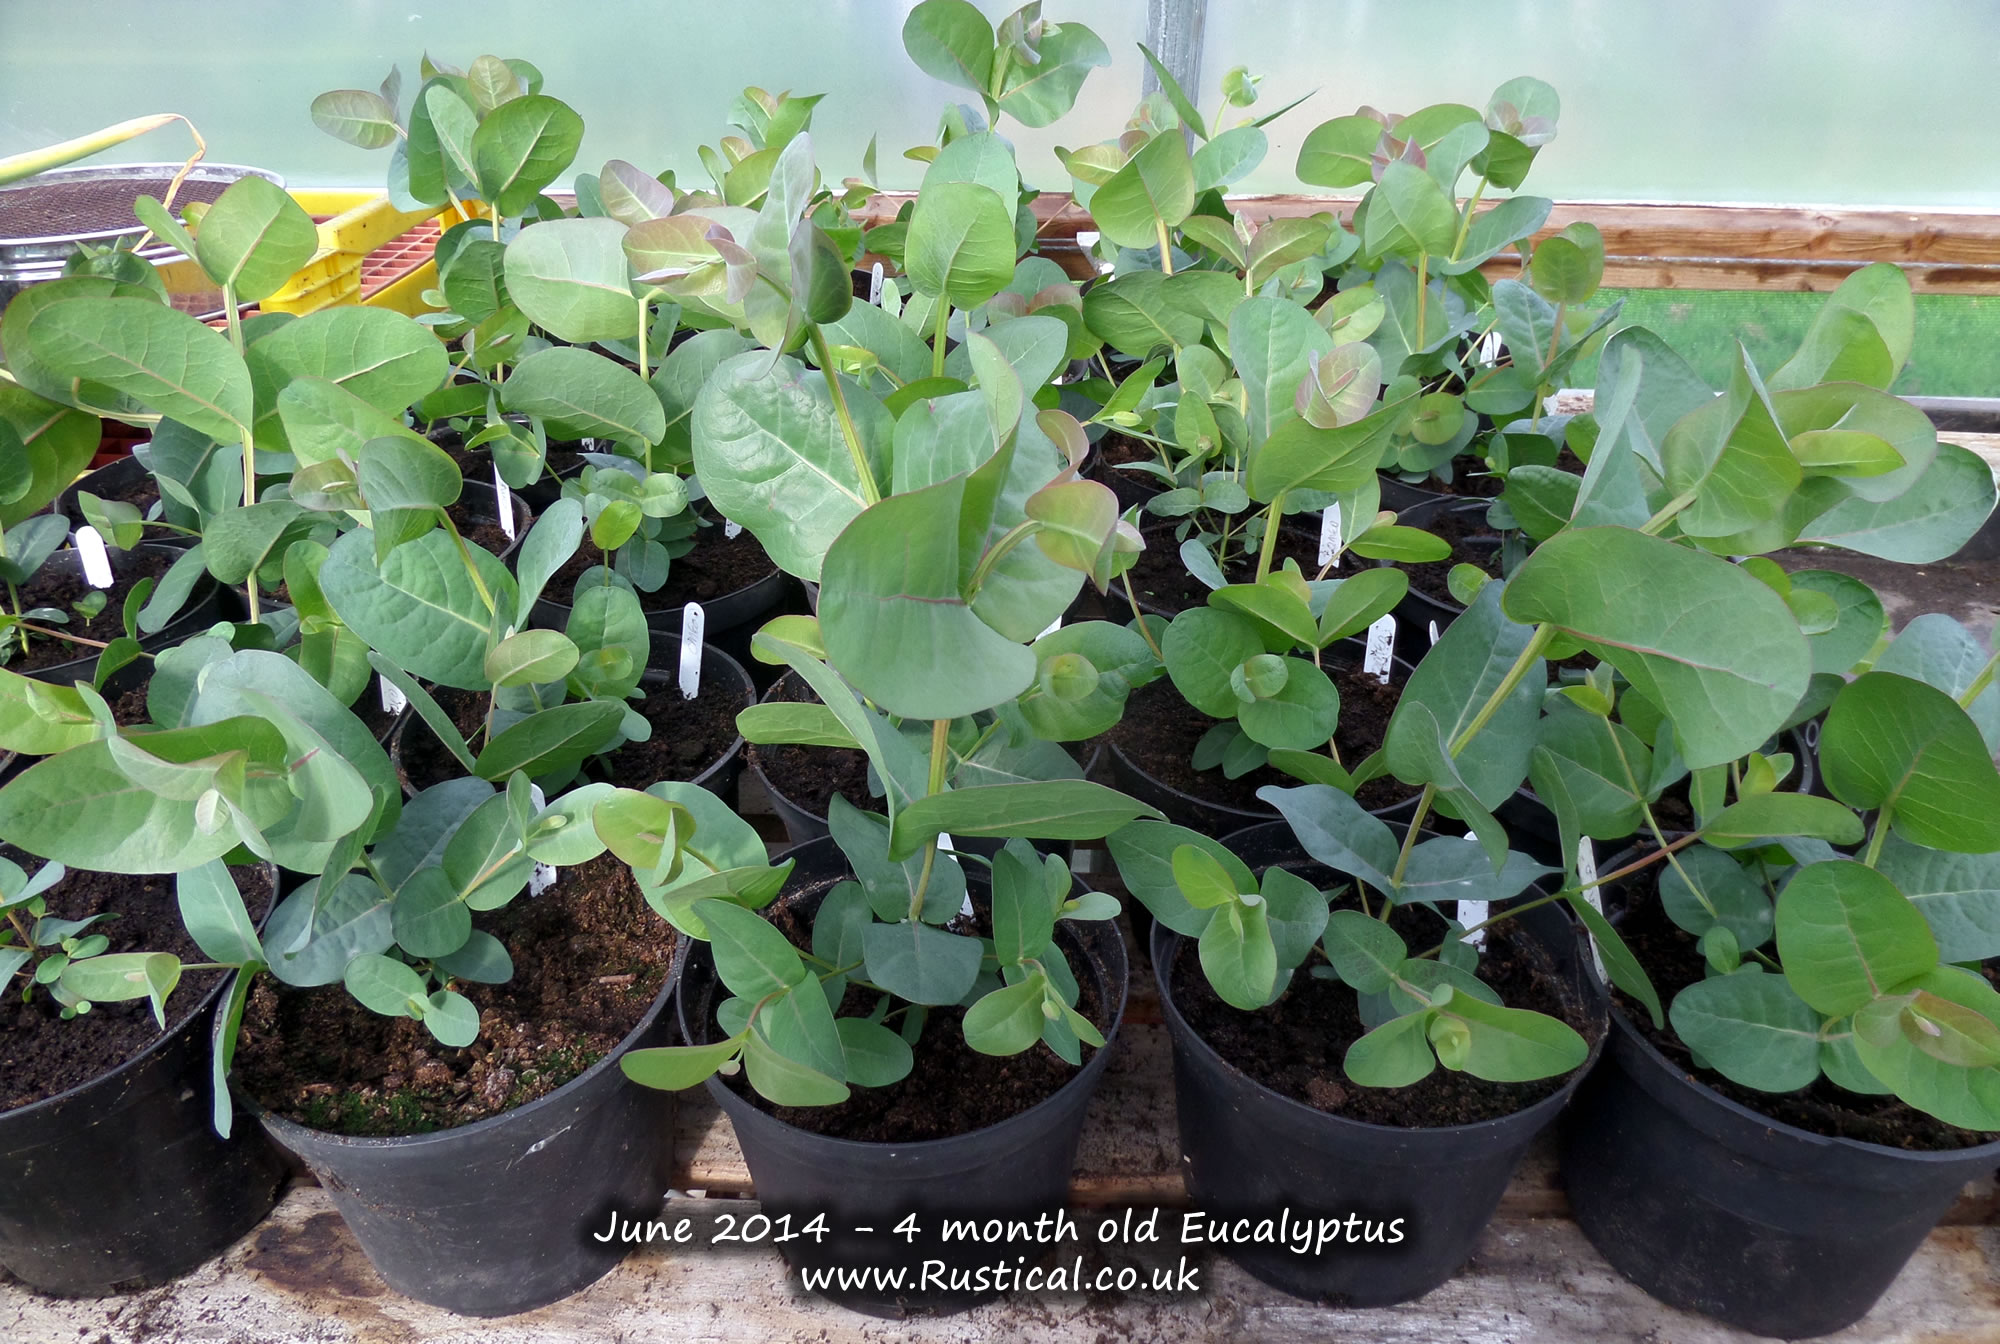 4 month old Eucalyptus (June 2014)